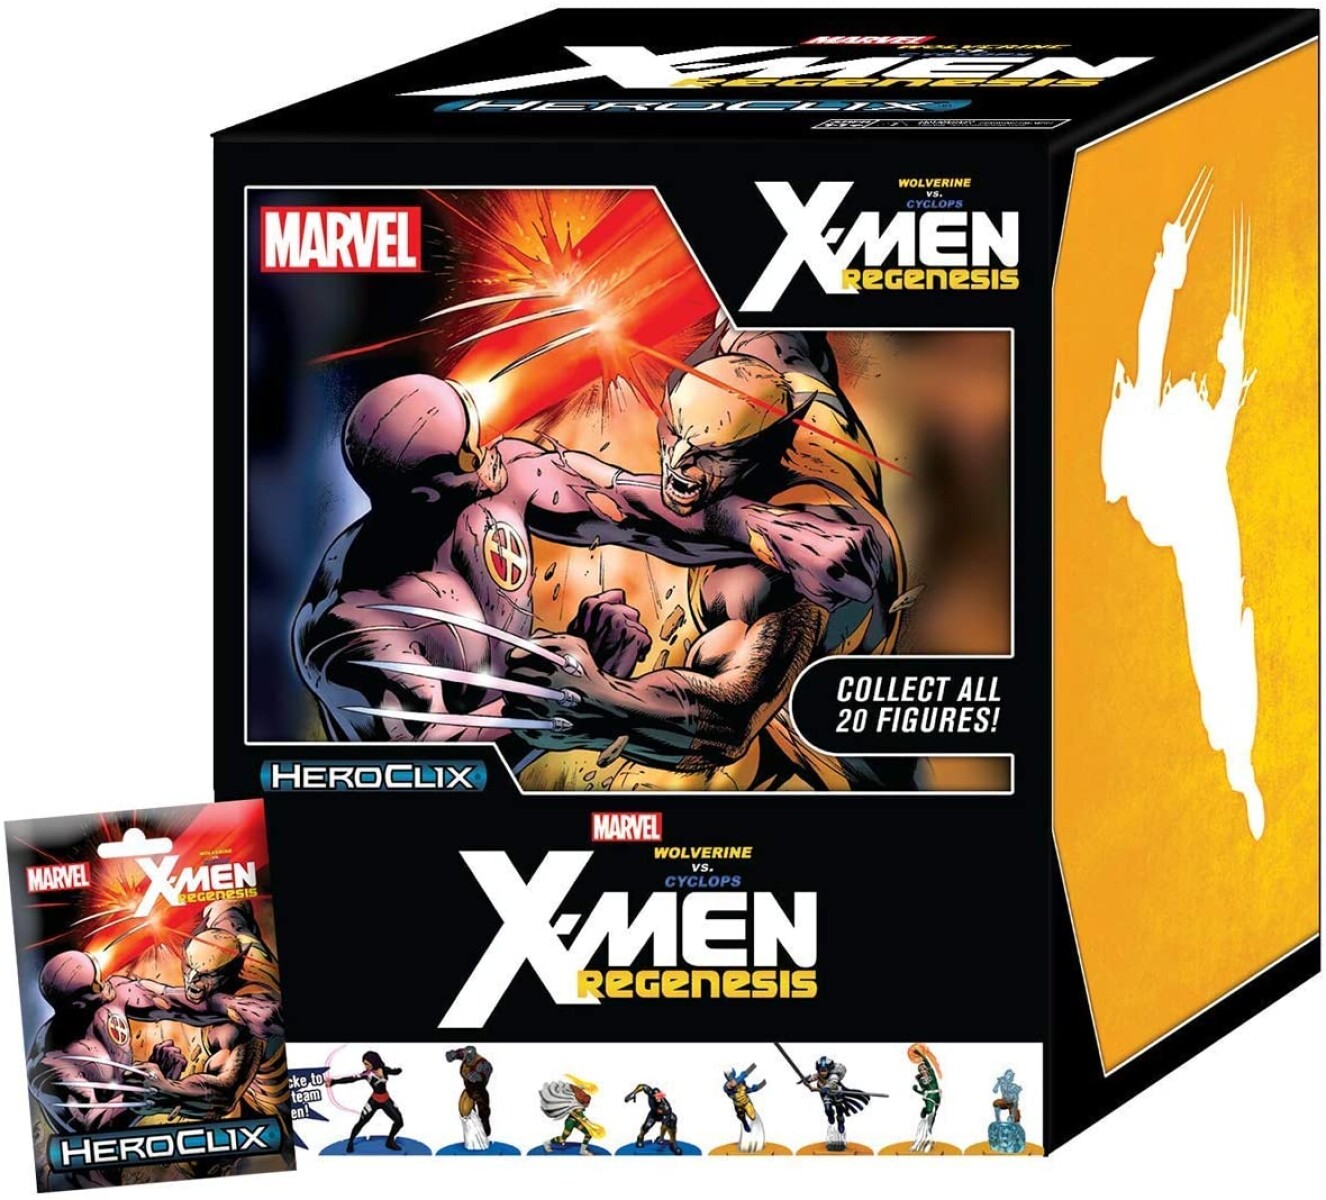 Marvel HeroClix: Wolverine vs. Cyclops X-Men Regenesis Gravity Feed 